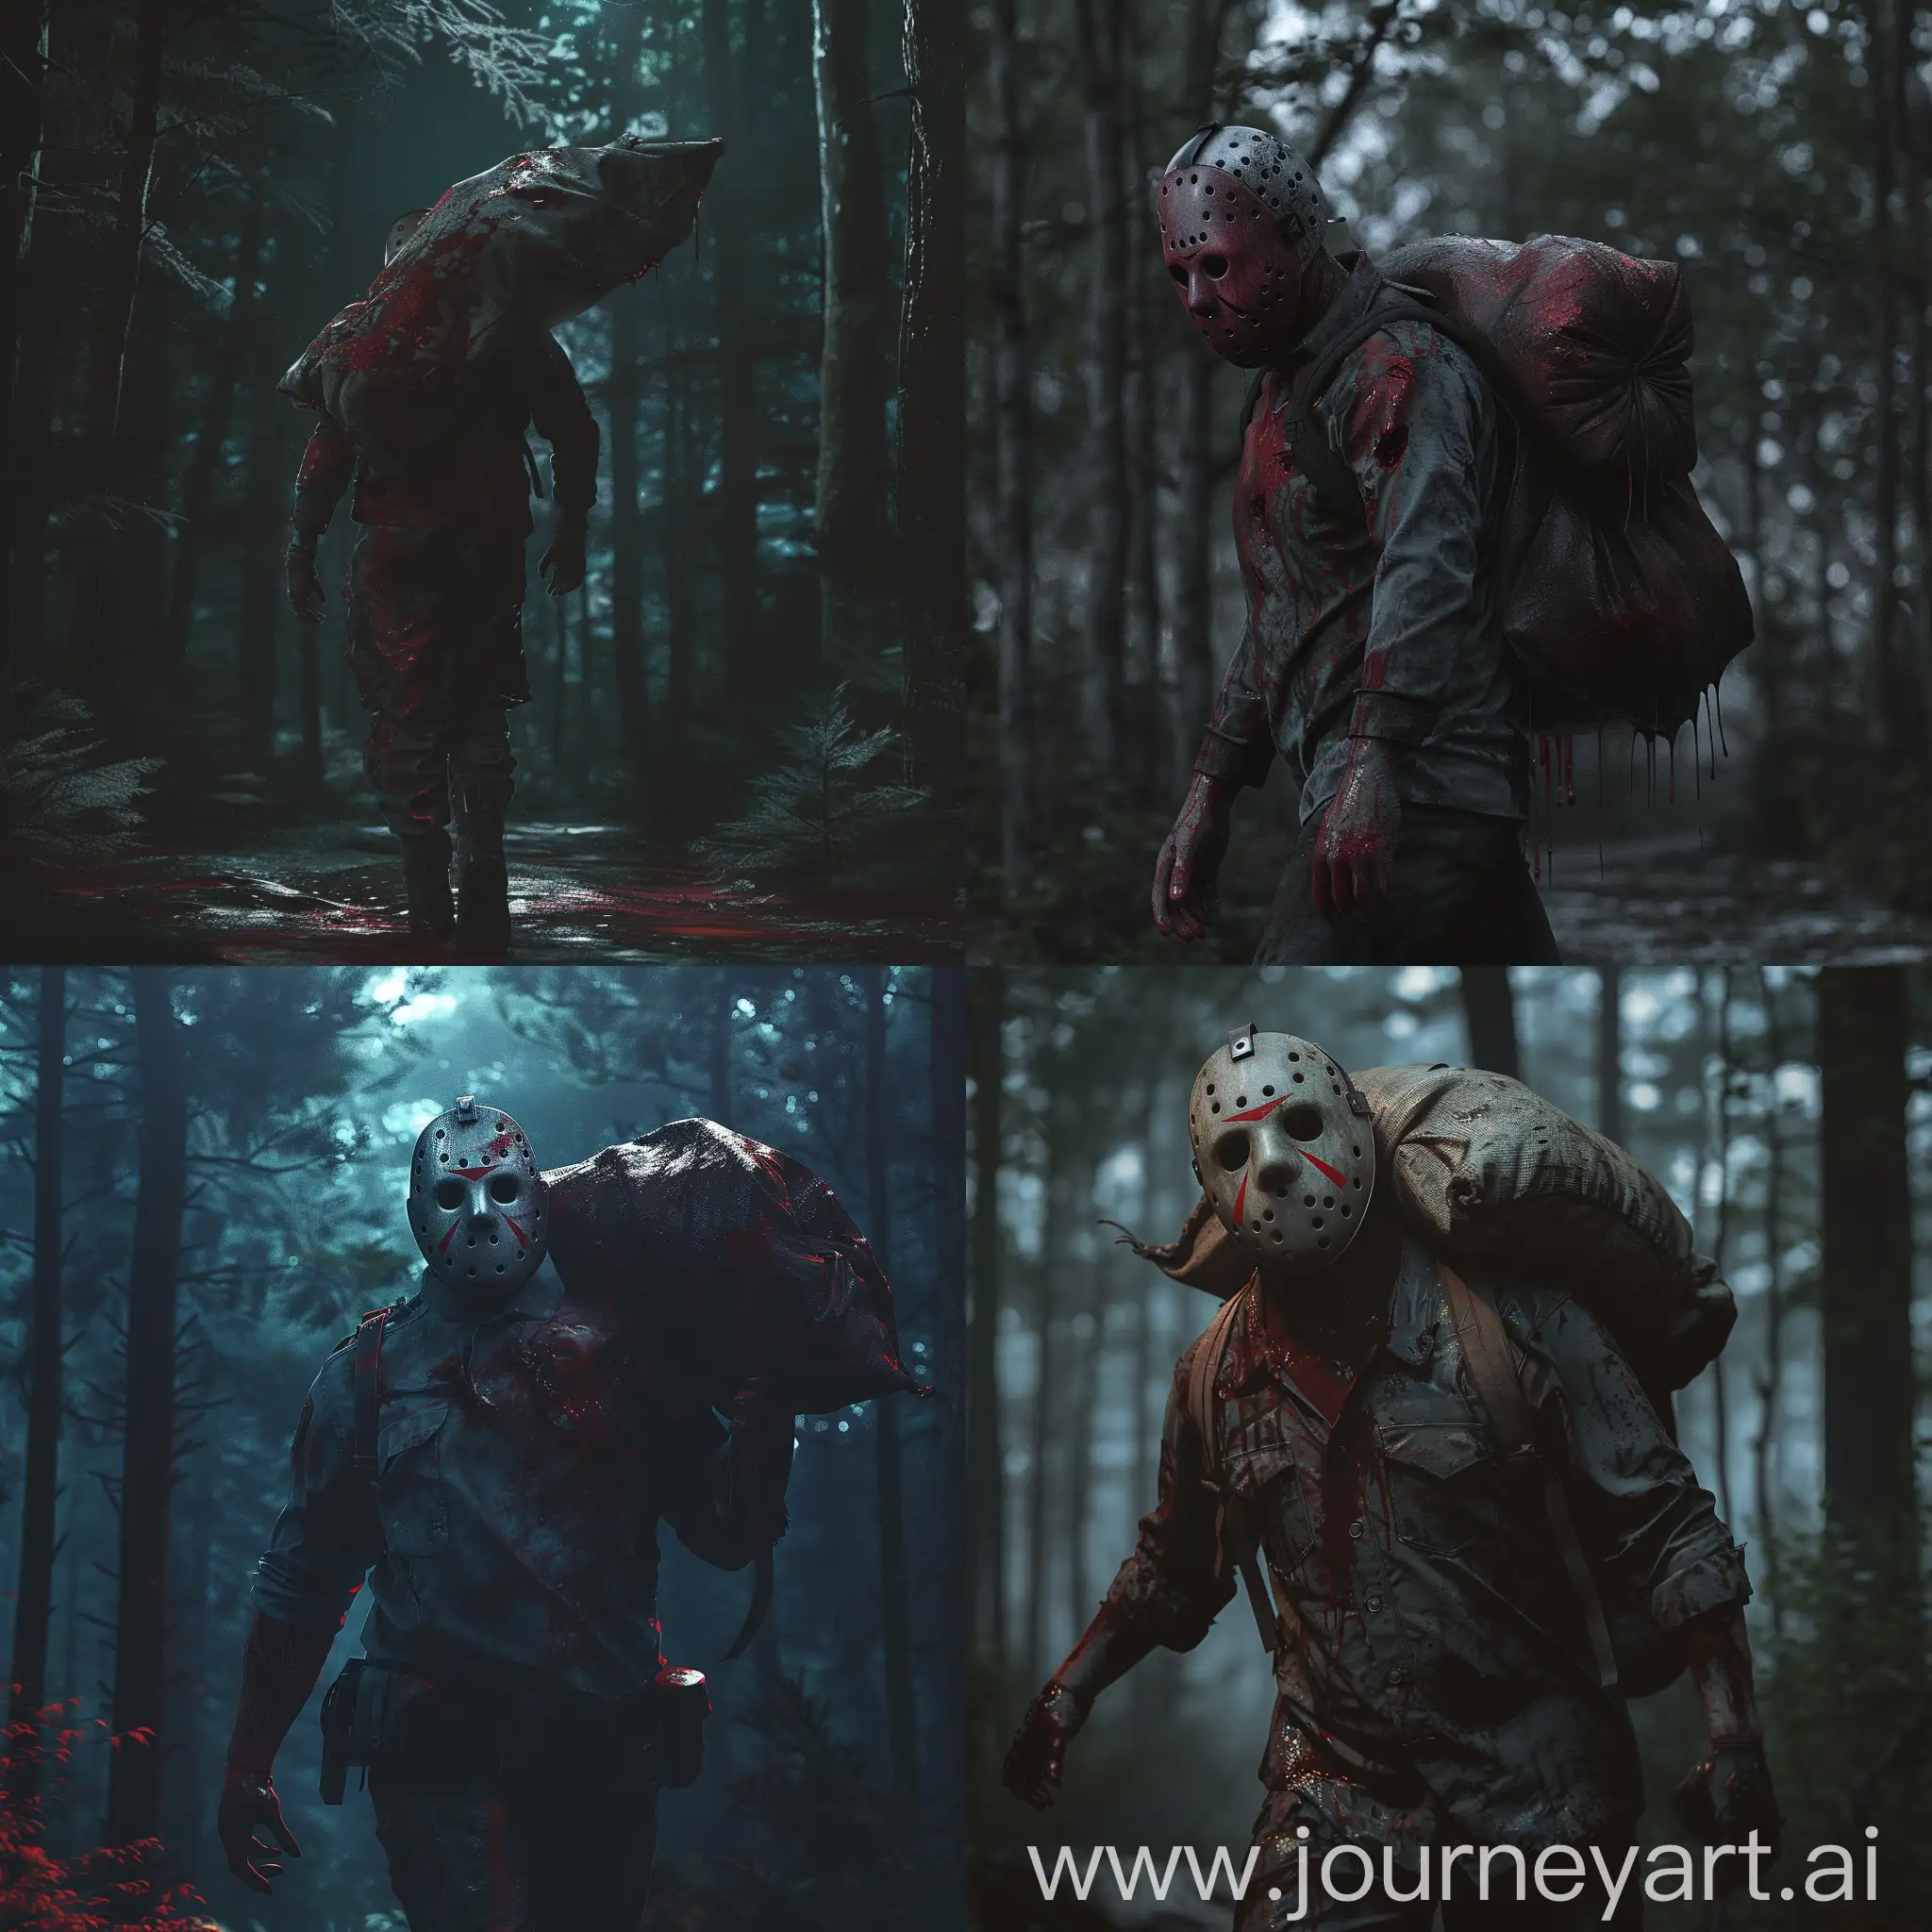 Jason-Voorhees-Carrying-Bloody-Sack-in-Dark-Forest-Cinematic-Photorealism